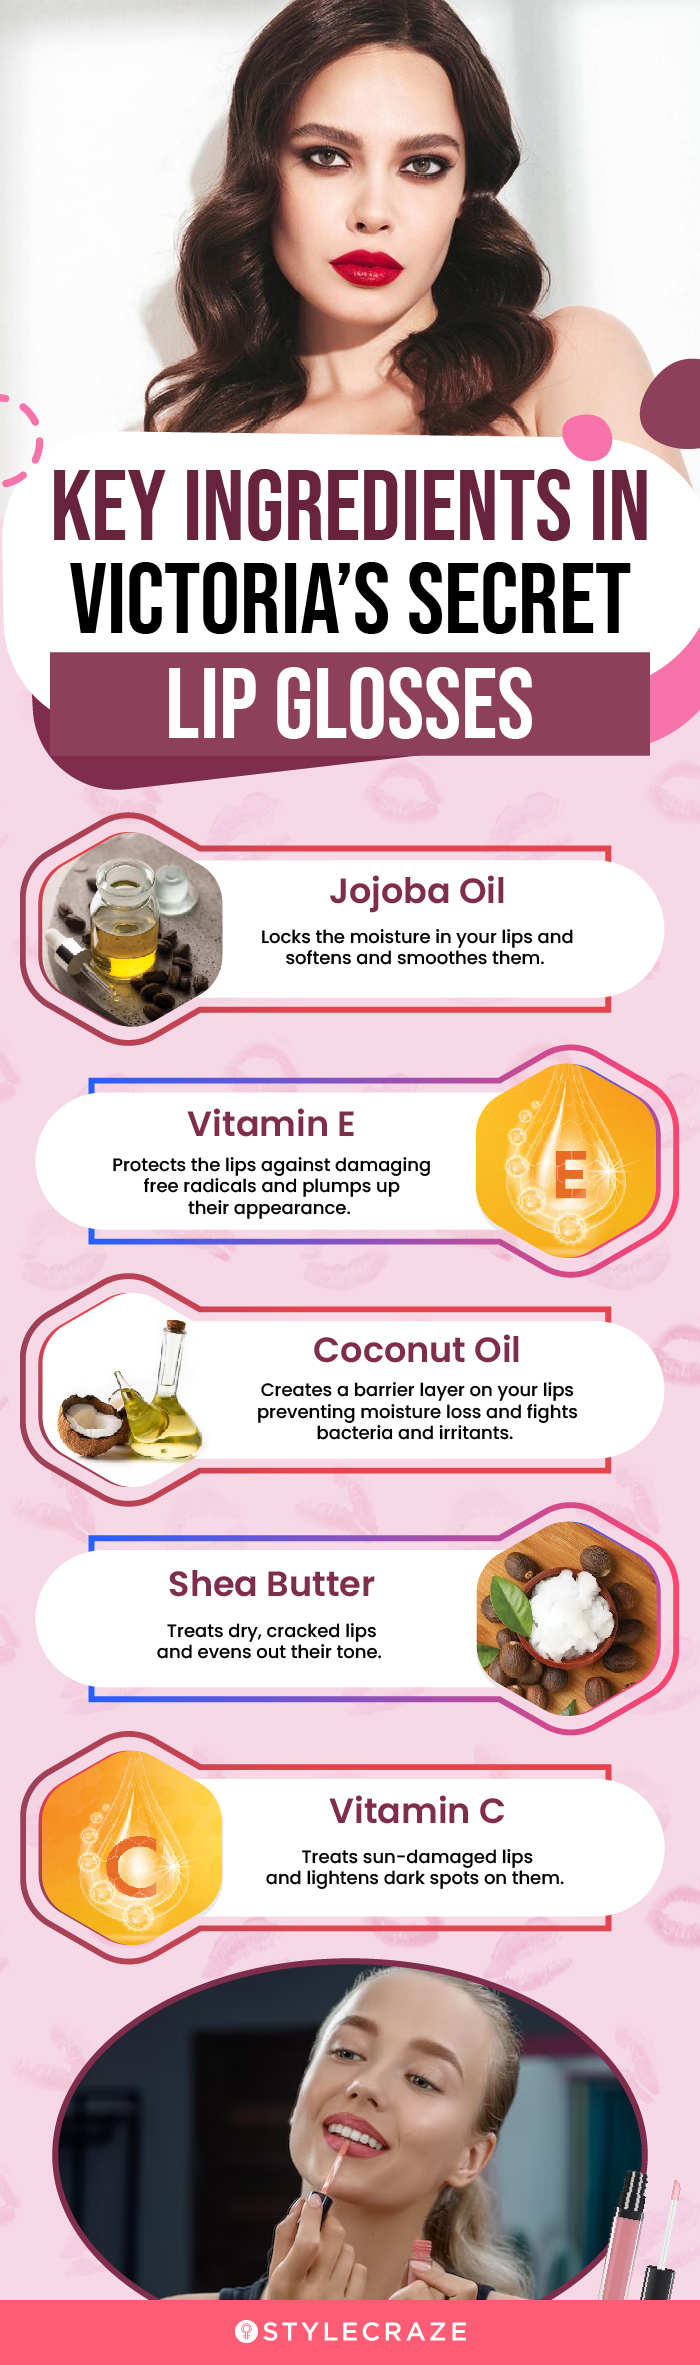 Key Ingredients In Victoria’s Secret Lip Glosses (infographic)